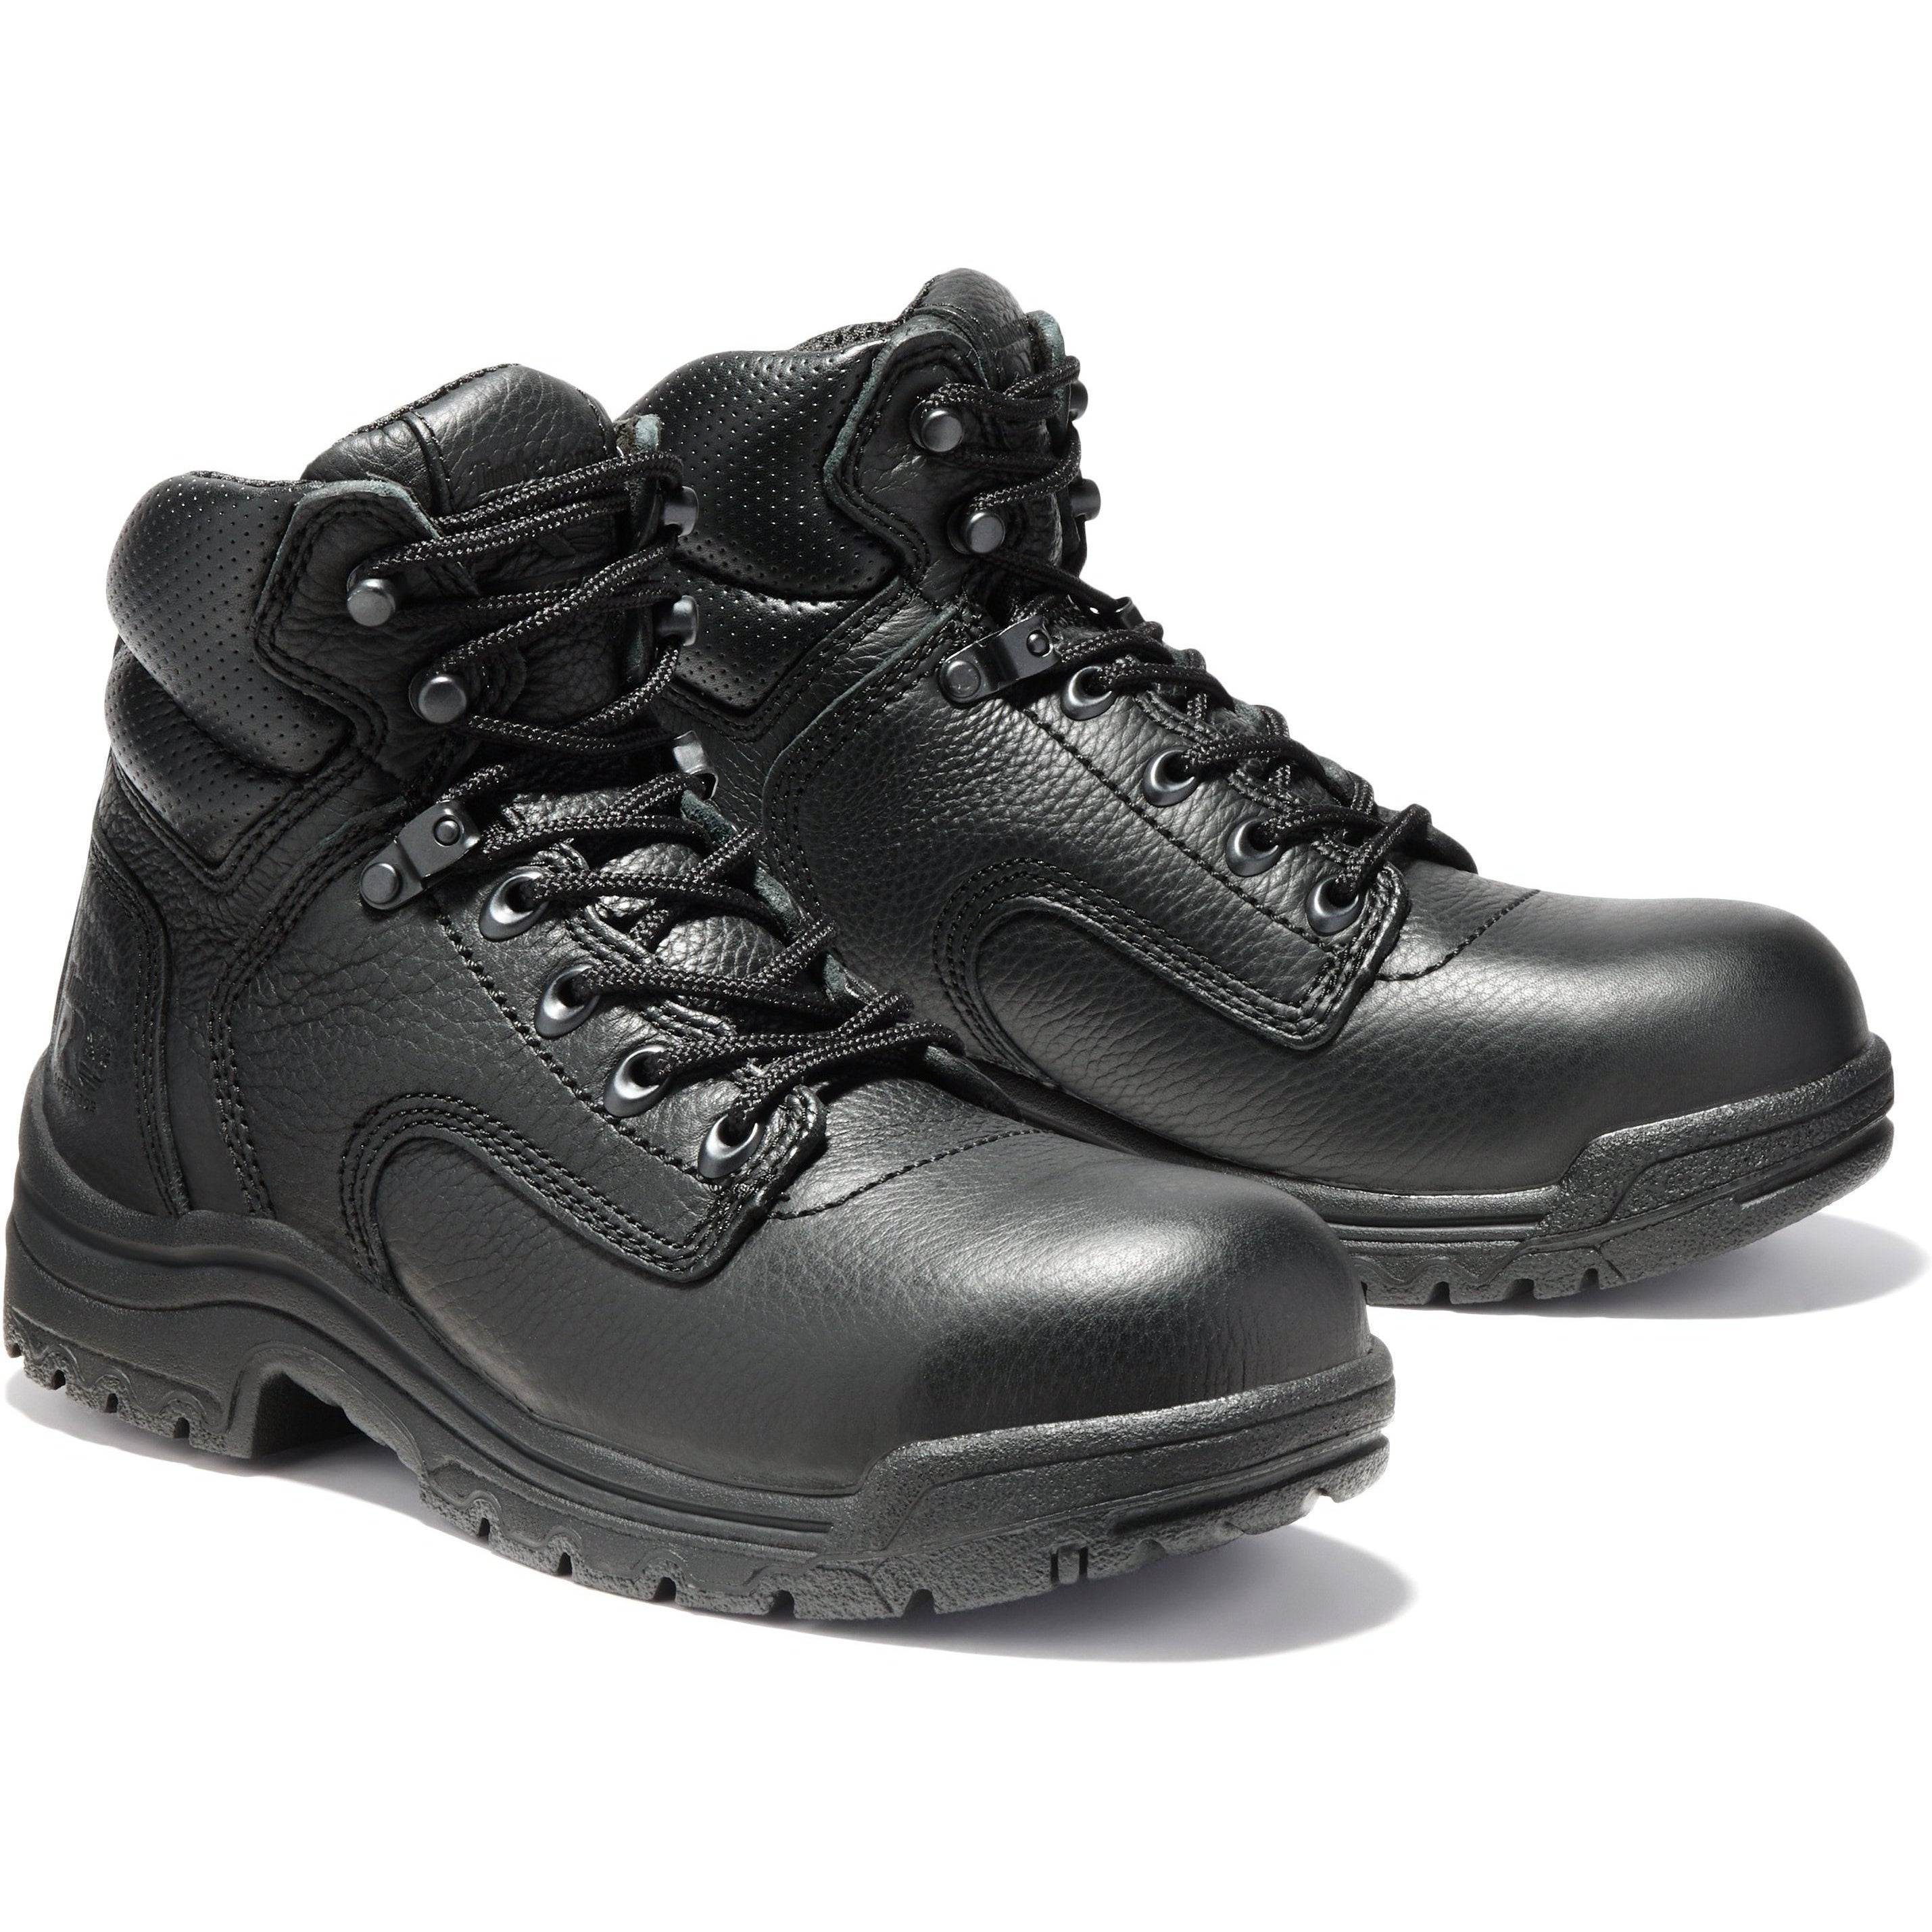 Timberland PRO Women's TITAN 6" Alloy Toe Work Boot Black TB072399001 5.5 / Medium / Black - Overlook Boots